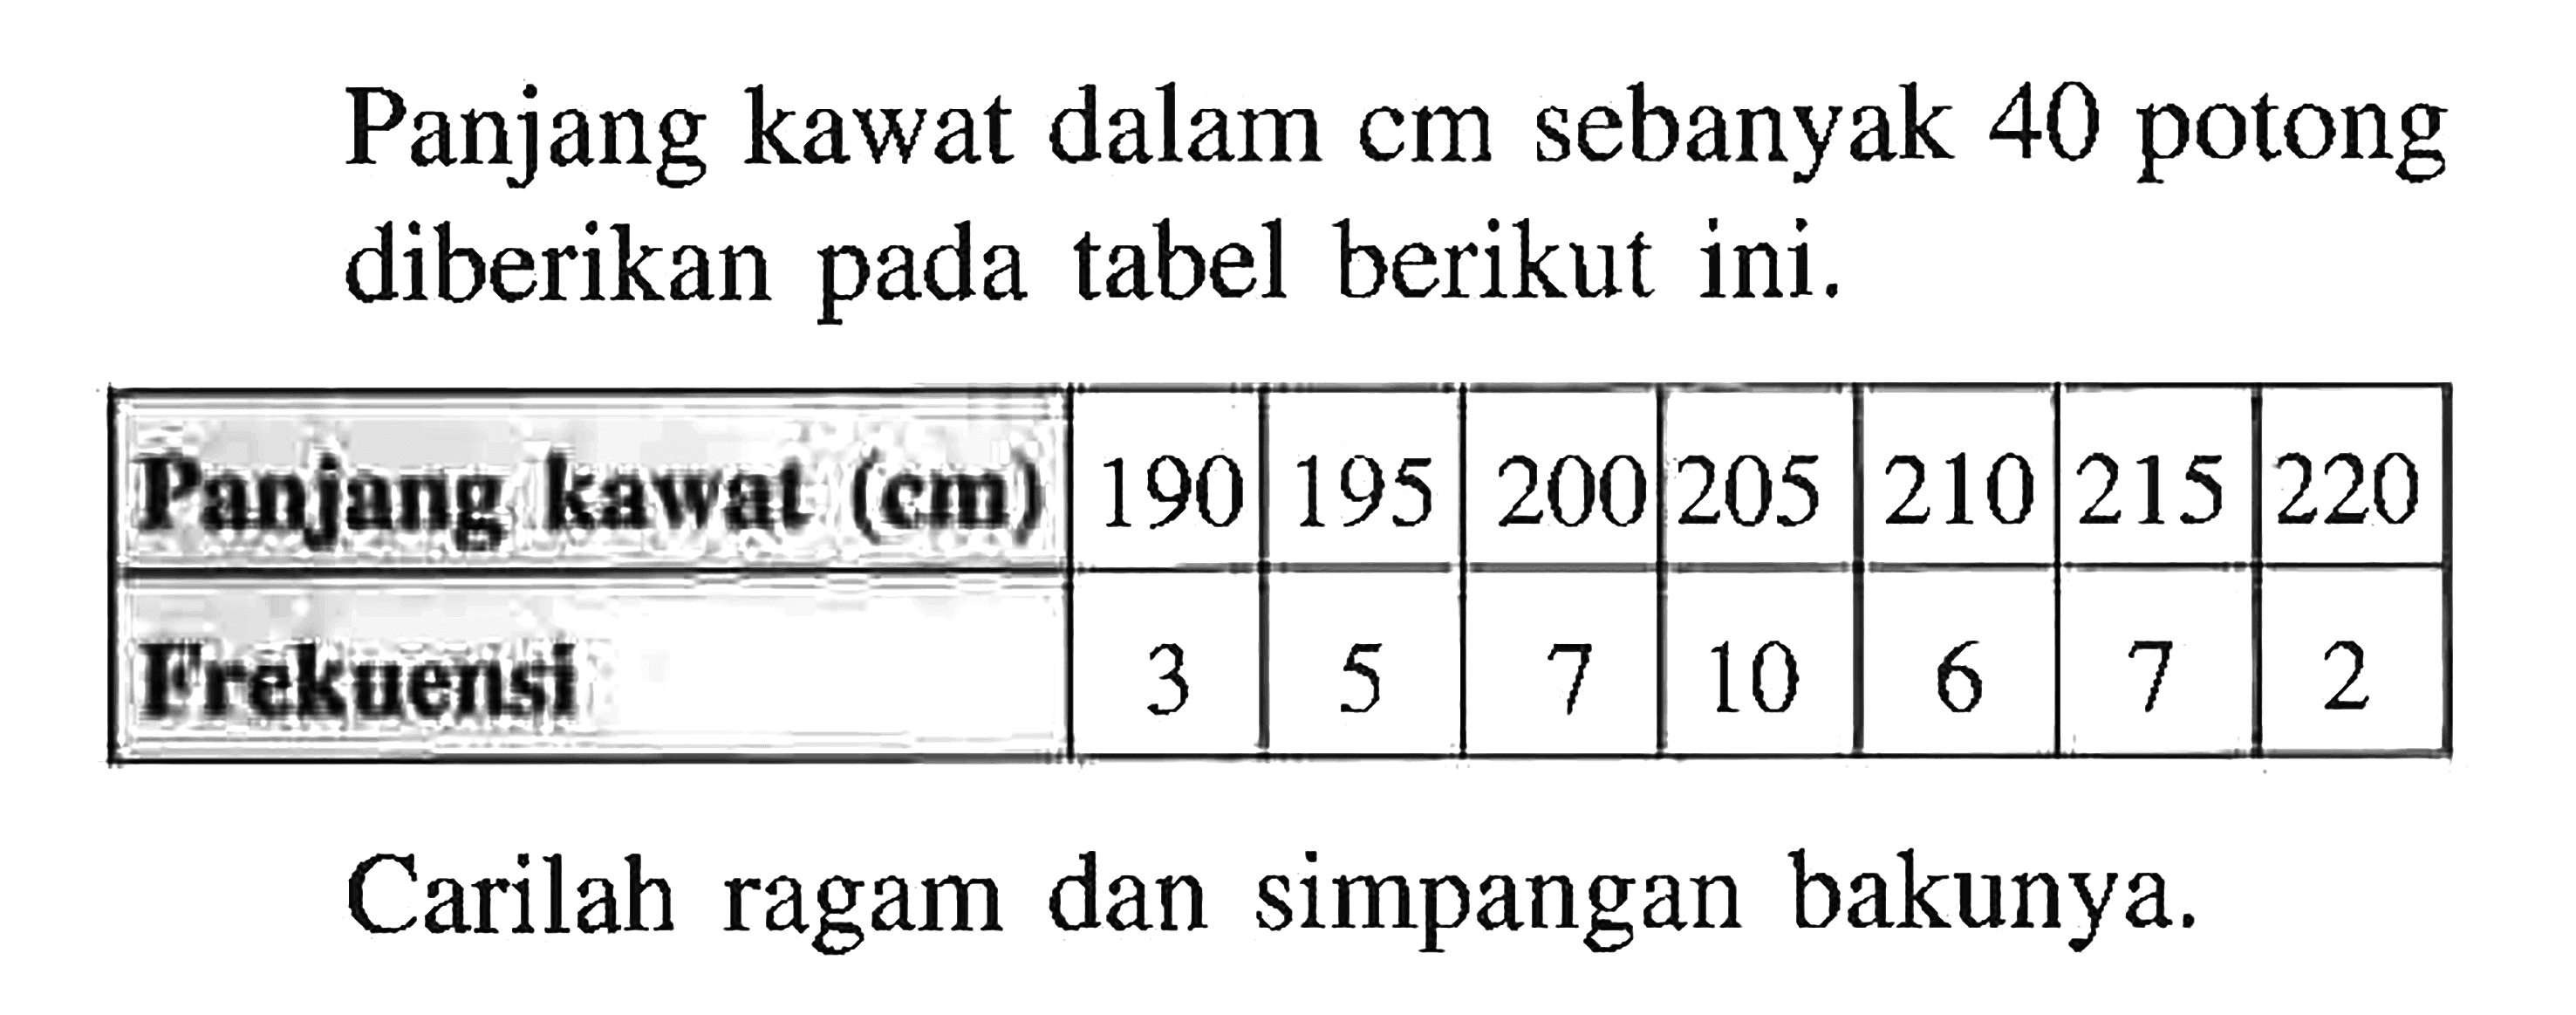 Panjang kawat dalam cm sebanyak 40 potong diberikan pada tabel berikut ini. Panjang kawat (cm) 190 195 200 205 210 215 220 Frekuensi 3 5 7 10 6 7 2 Carilah ragam dan simpangan bakunya.